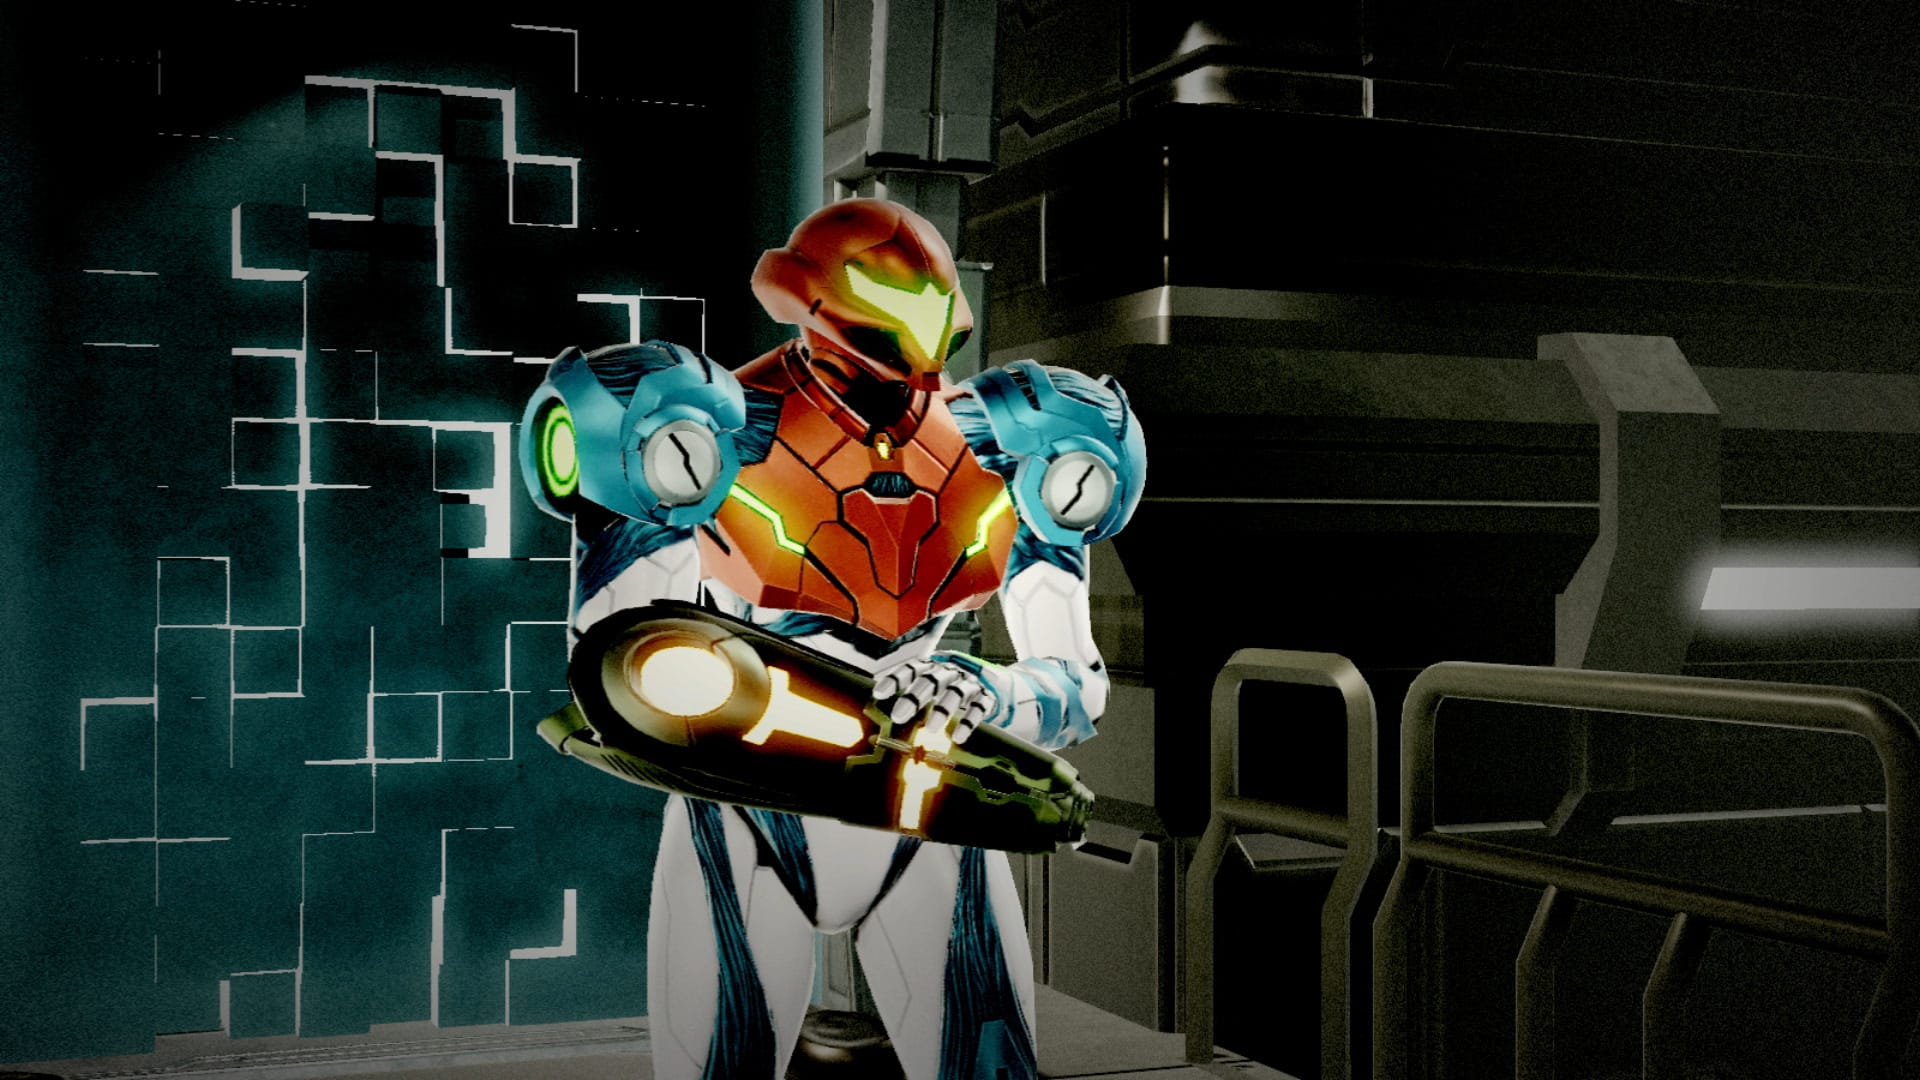 Metroid Dread Trailer Gives Players Another Sneak Peek – Gameranx